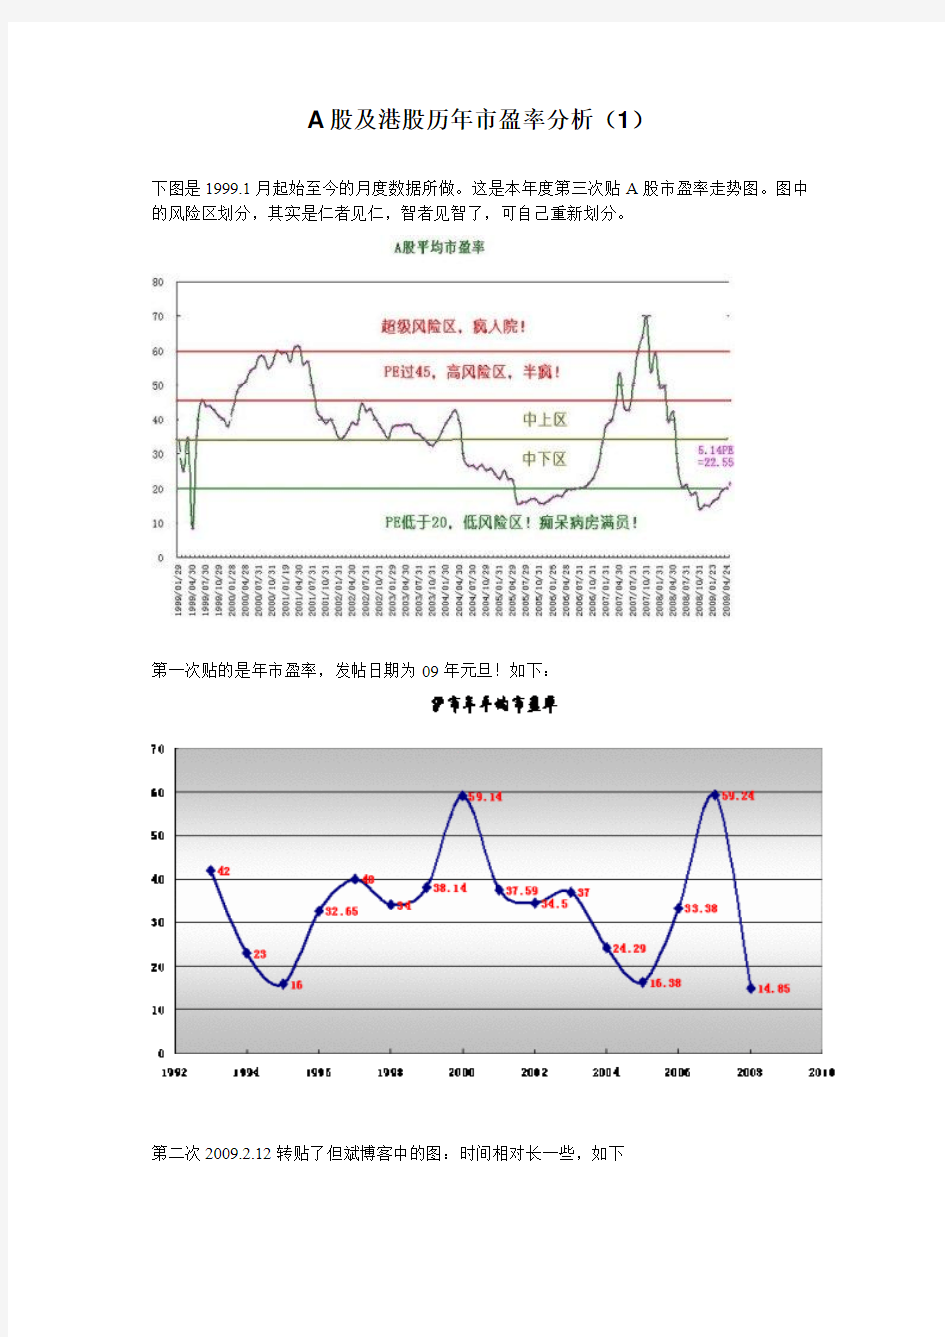 A股及港股、美股、台股、日本股市历年市盈率分析